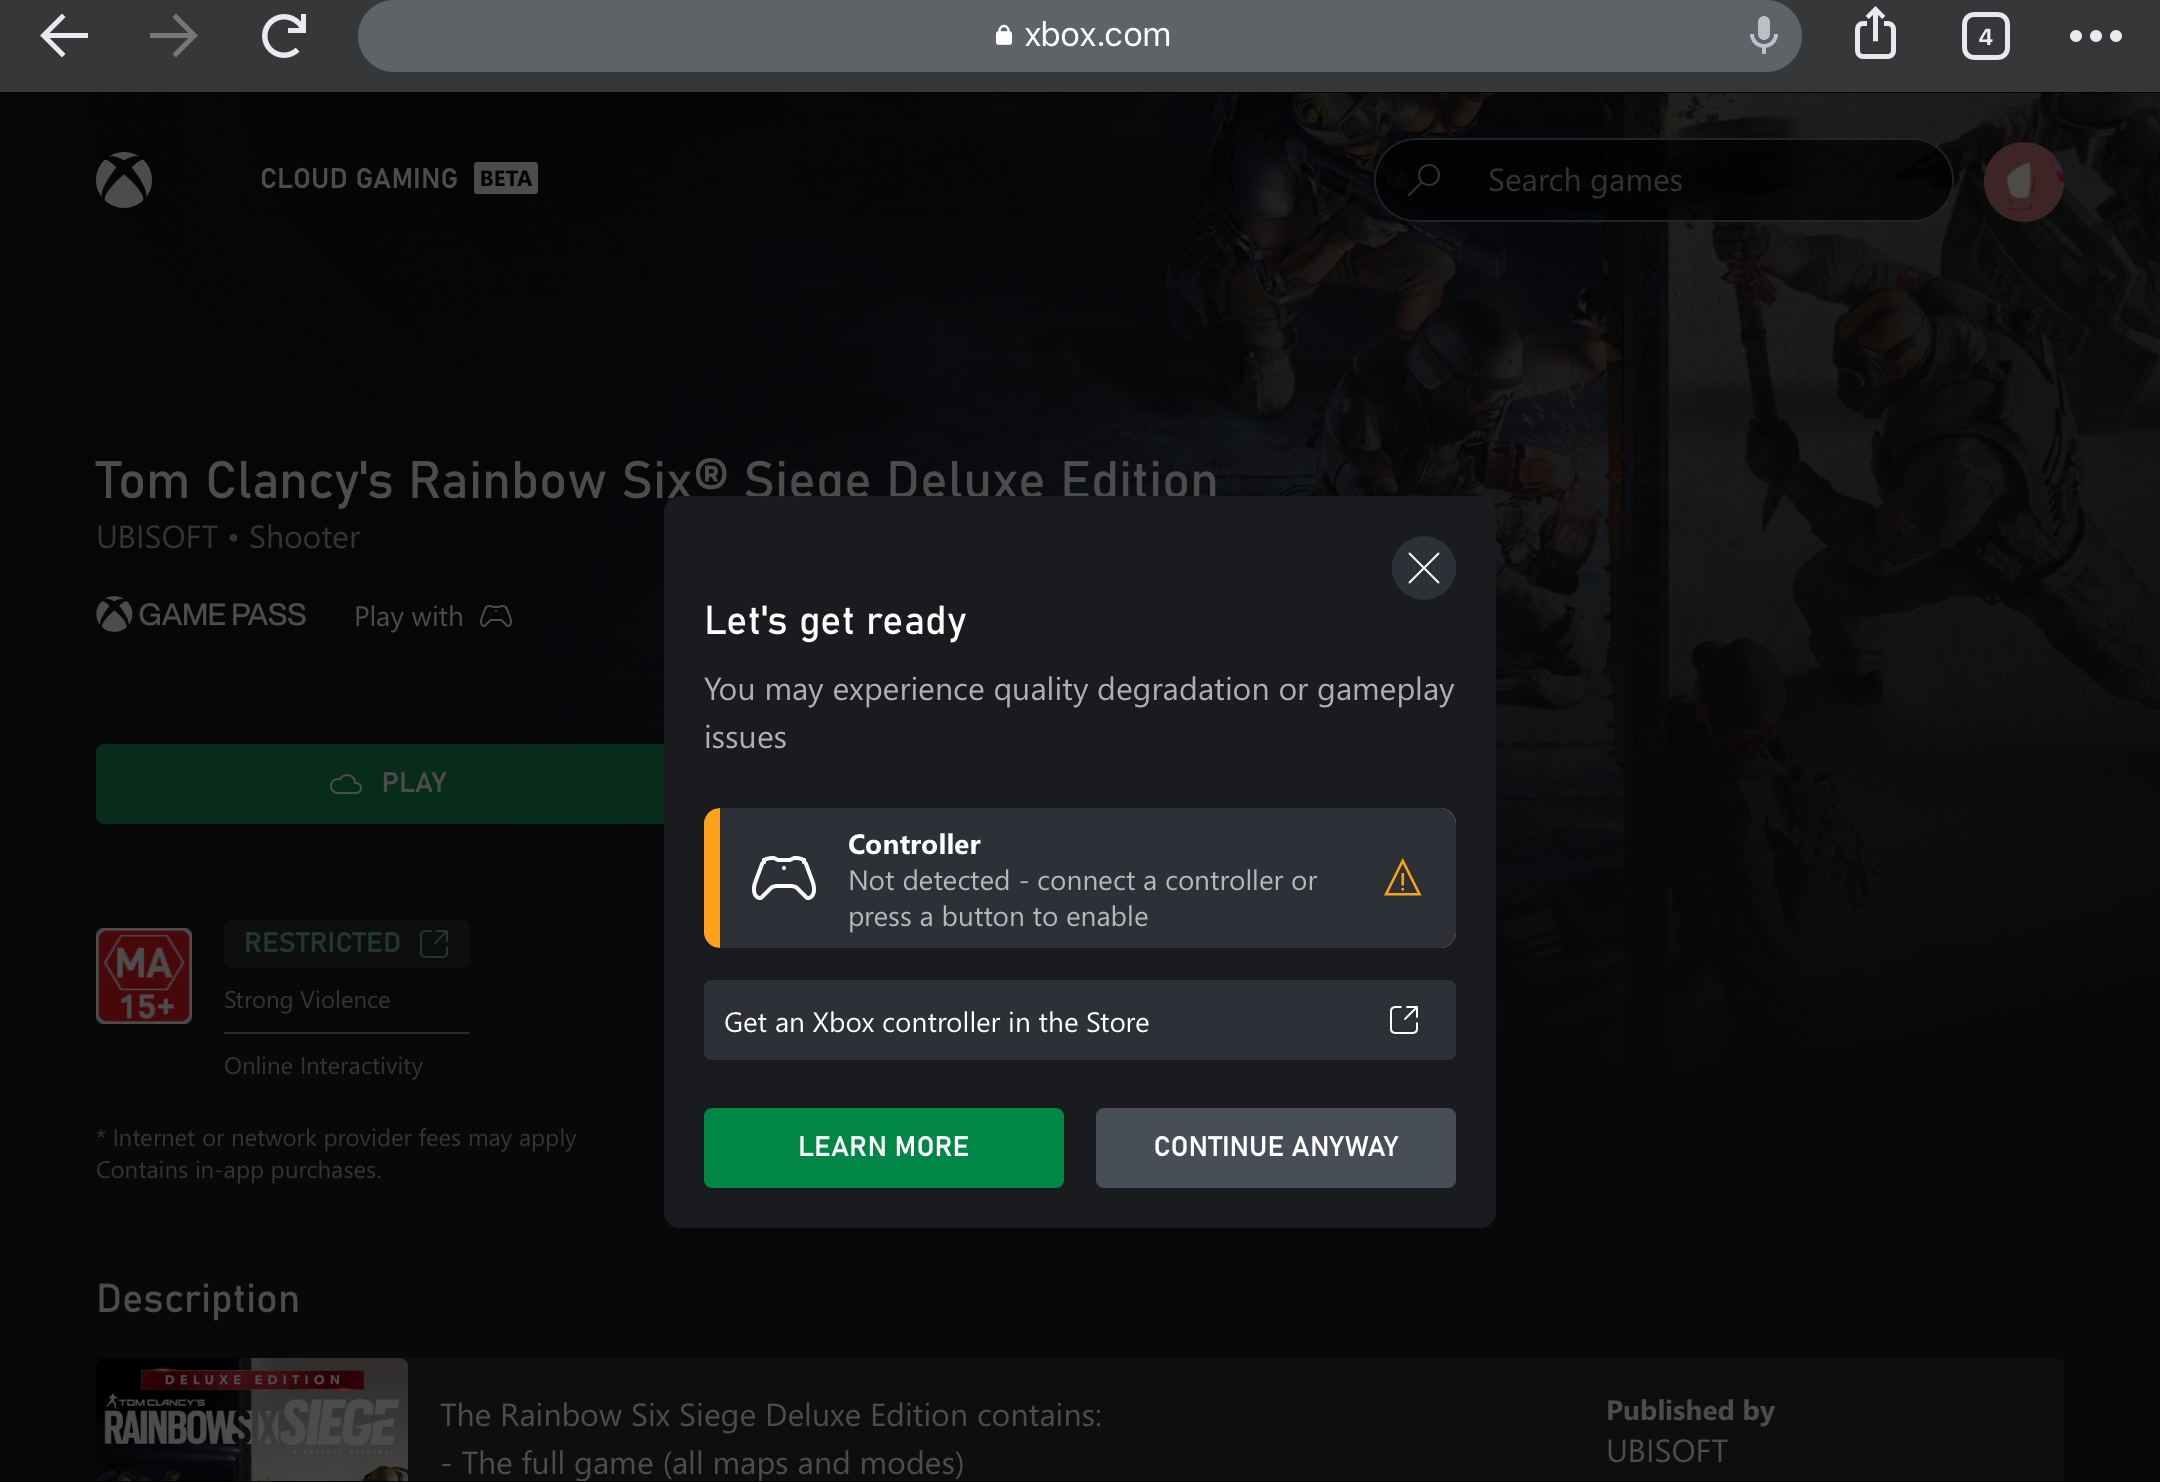 Cloud gaming Xbox error - Microsoft Community